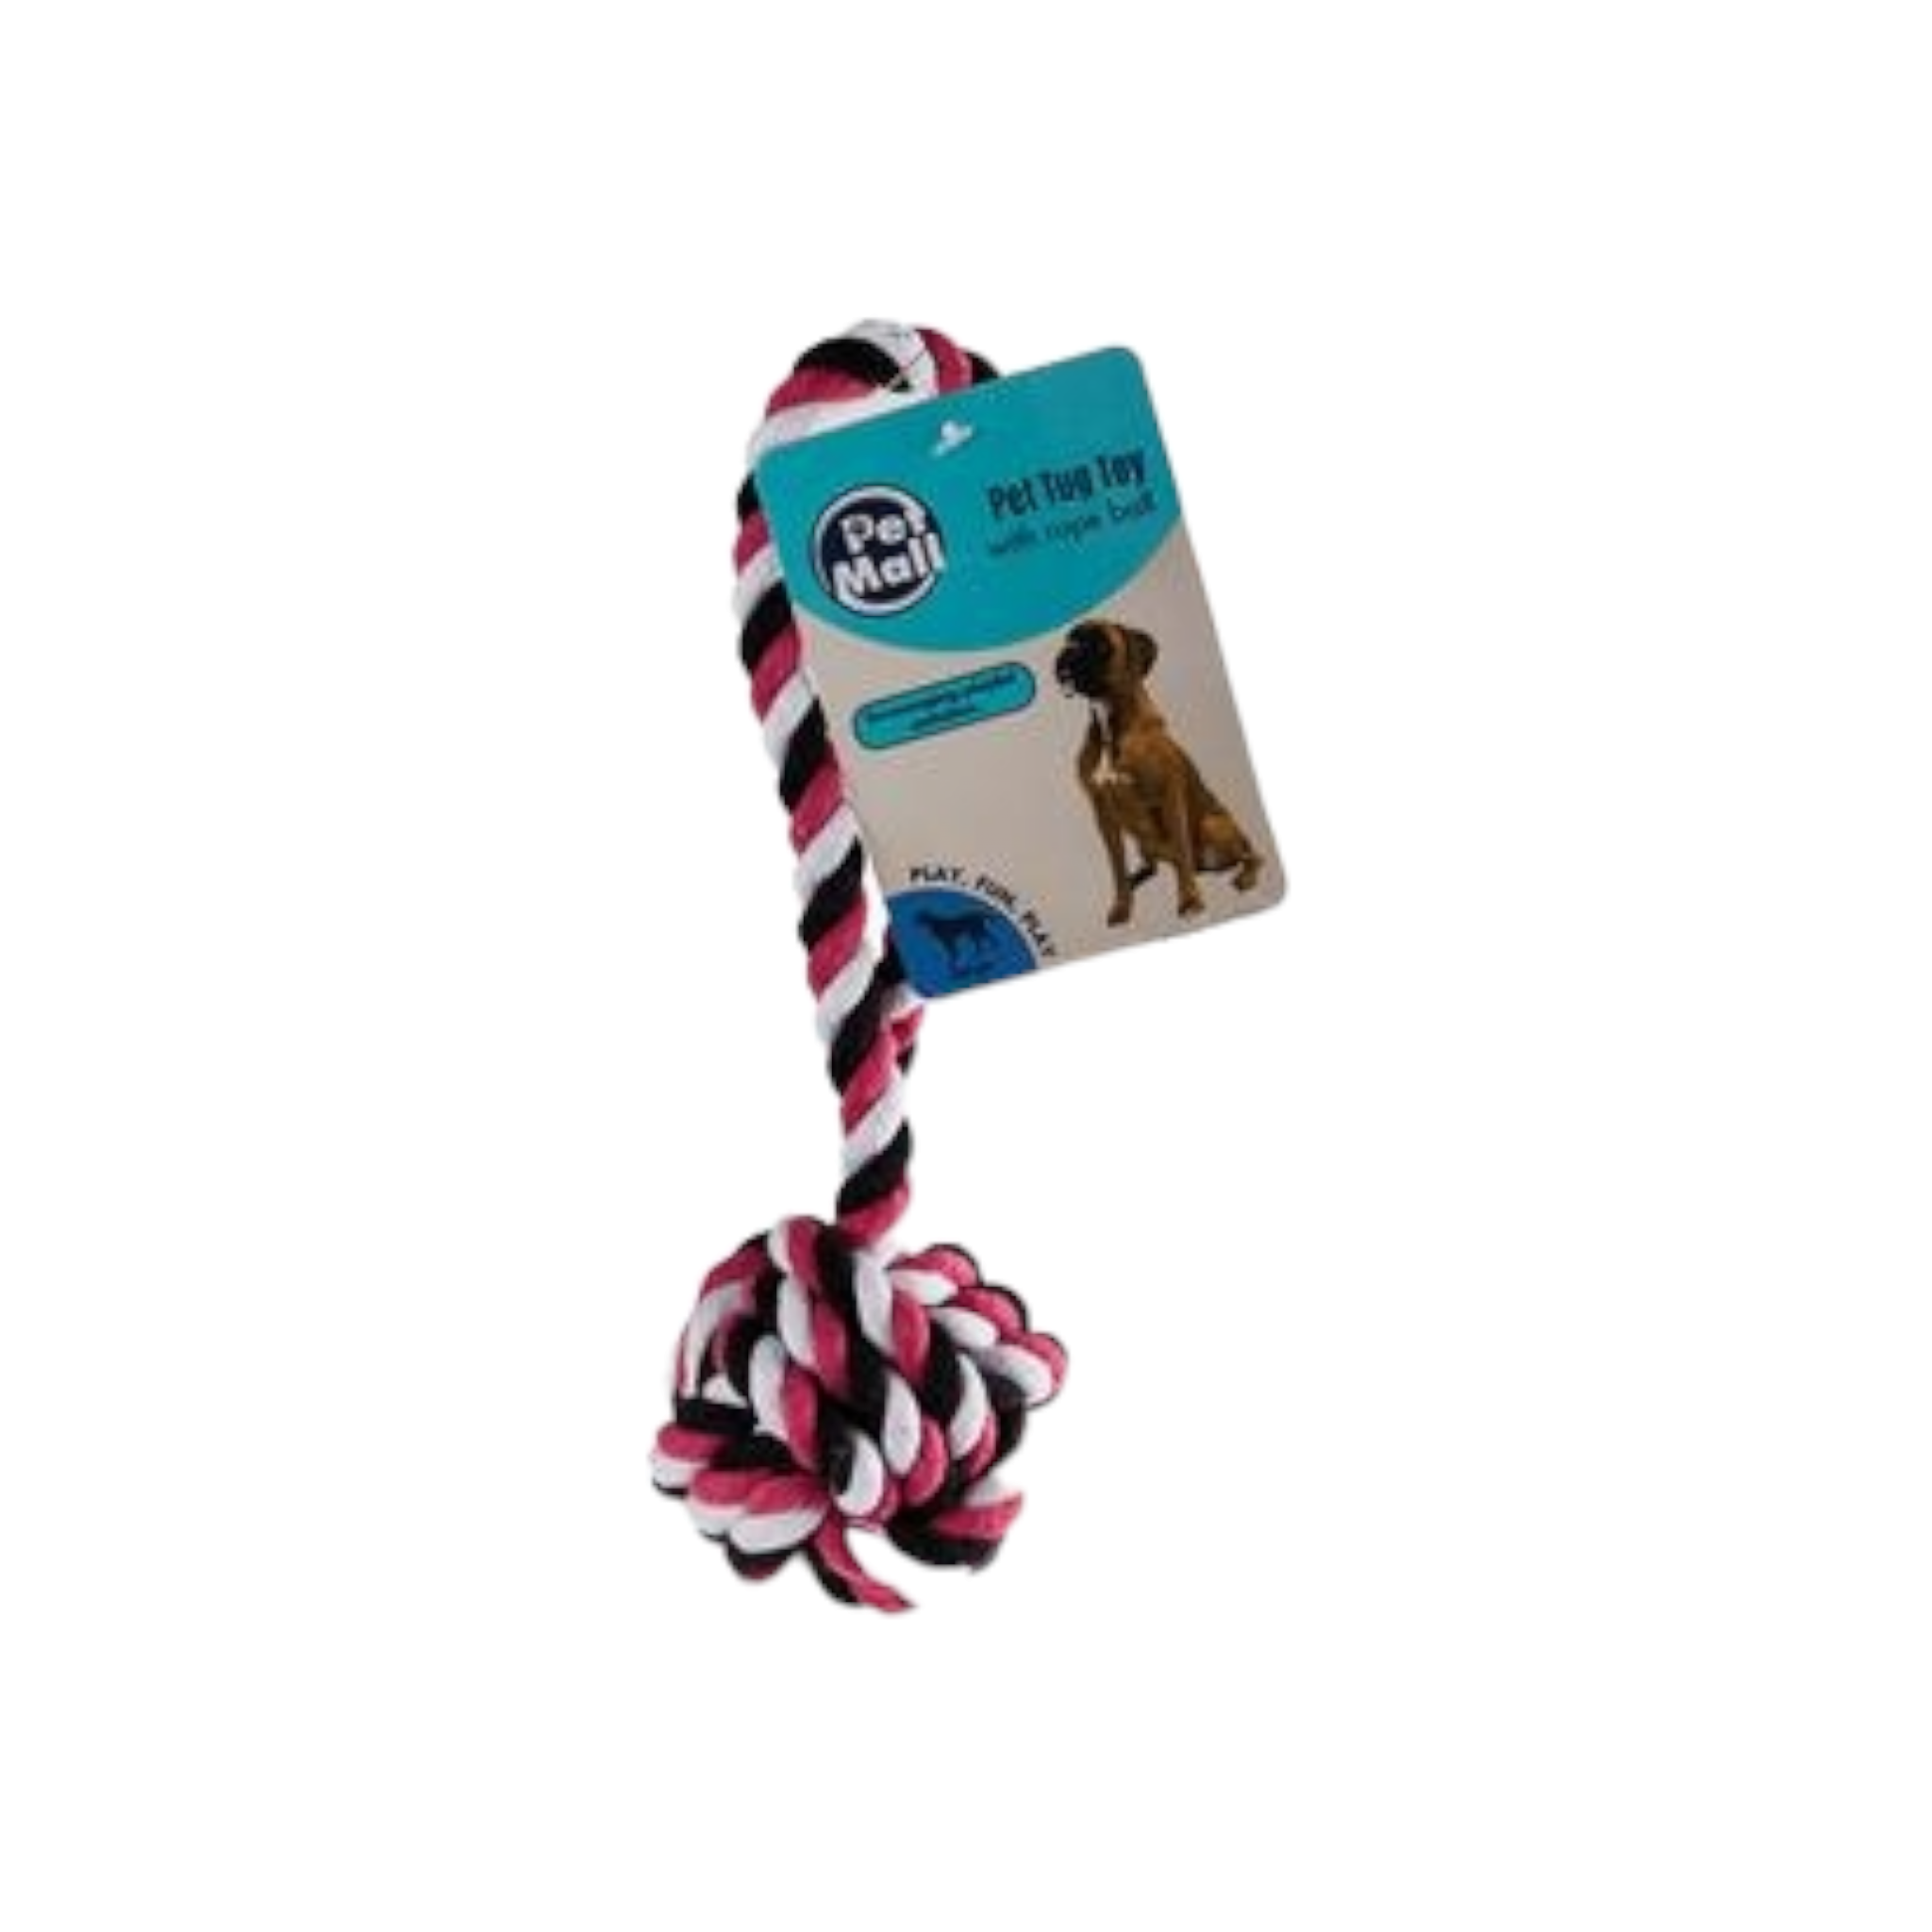 Pet Mall Dog Toy Tug Rope Ball 8cm each